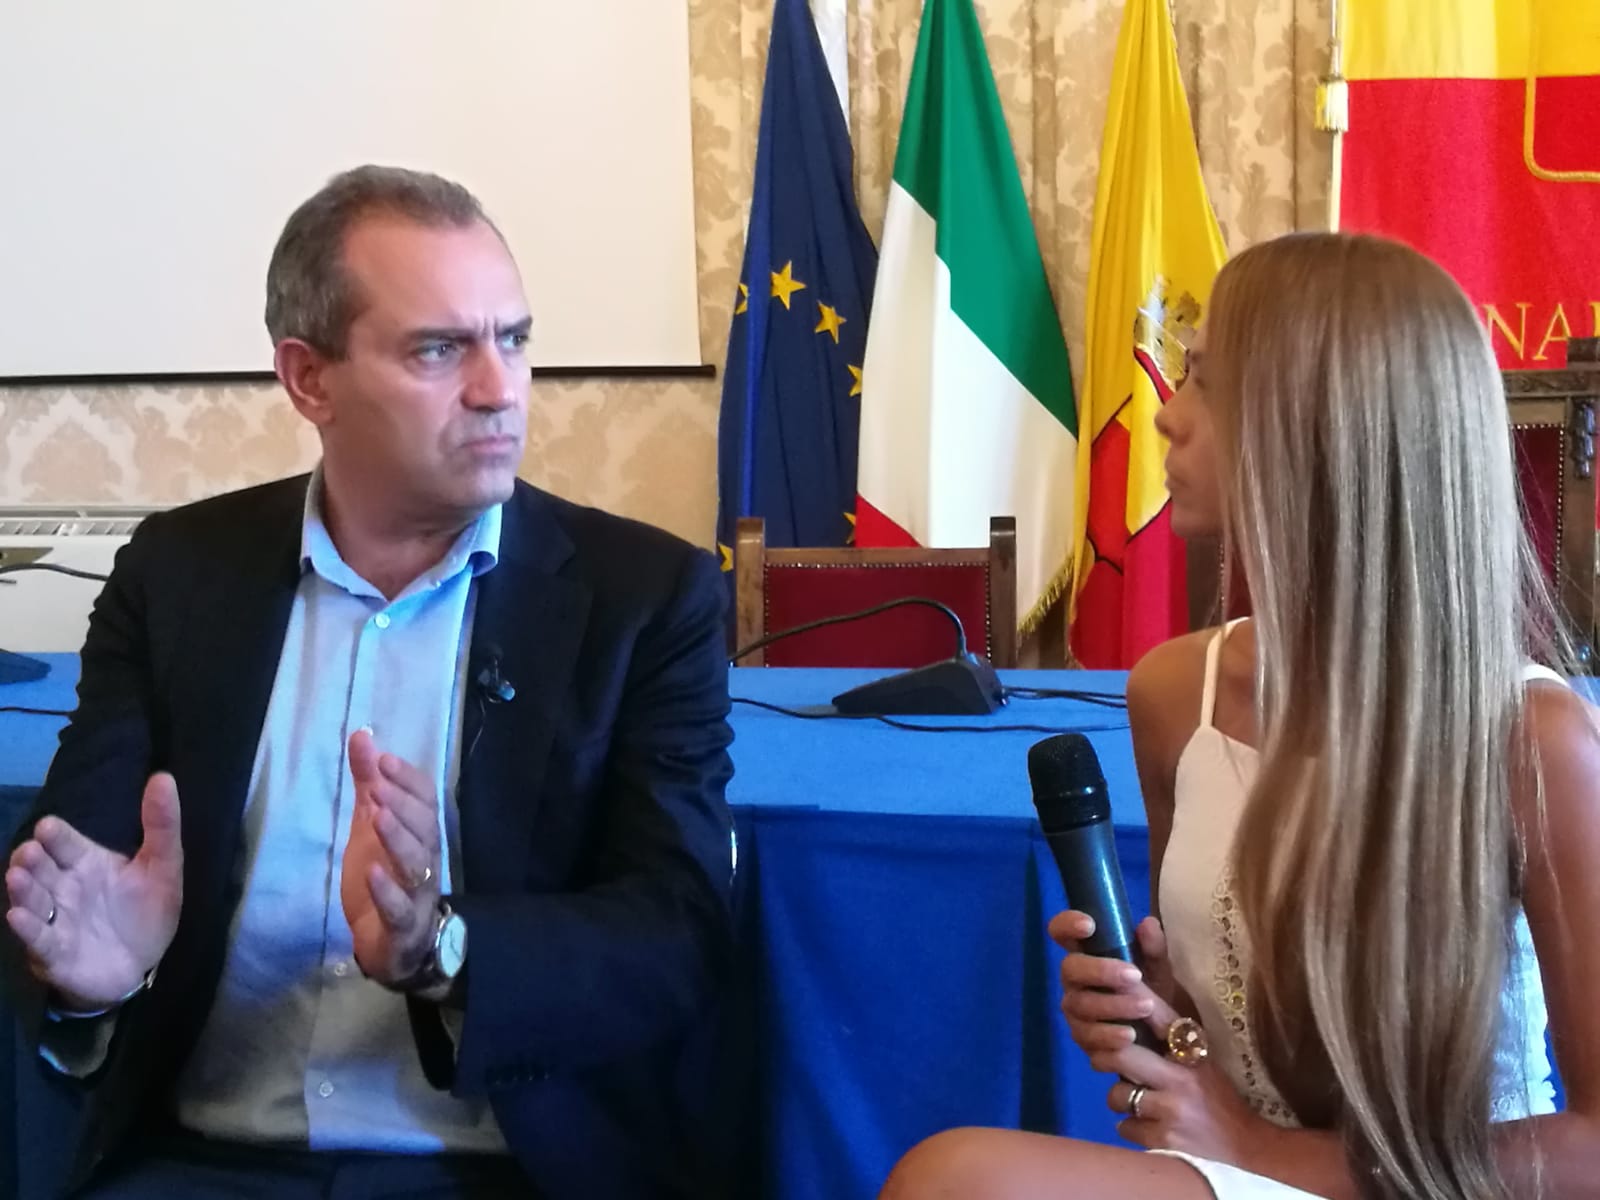 Napoli, de Magistris: ‘Chiederò al ministro la tangenziale gratis’